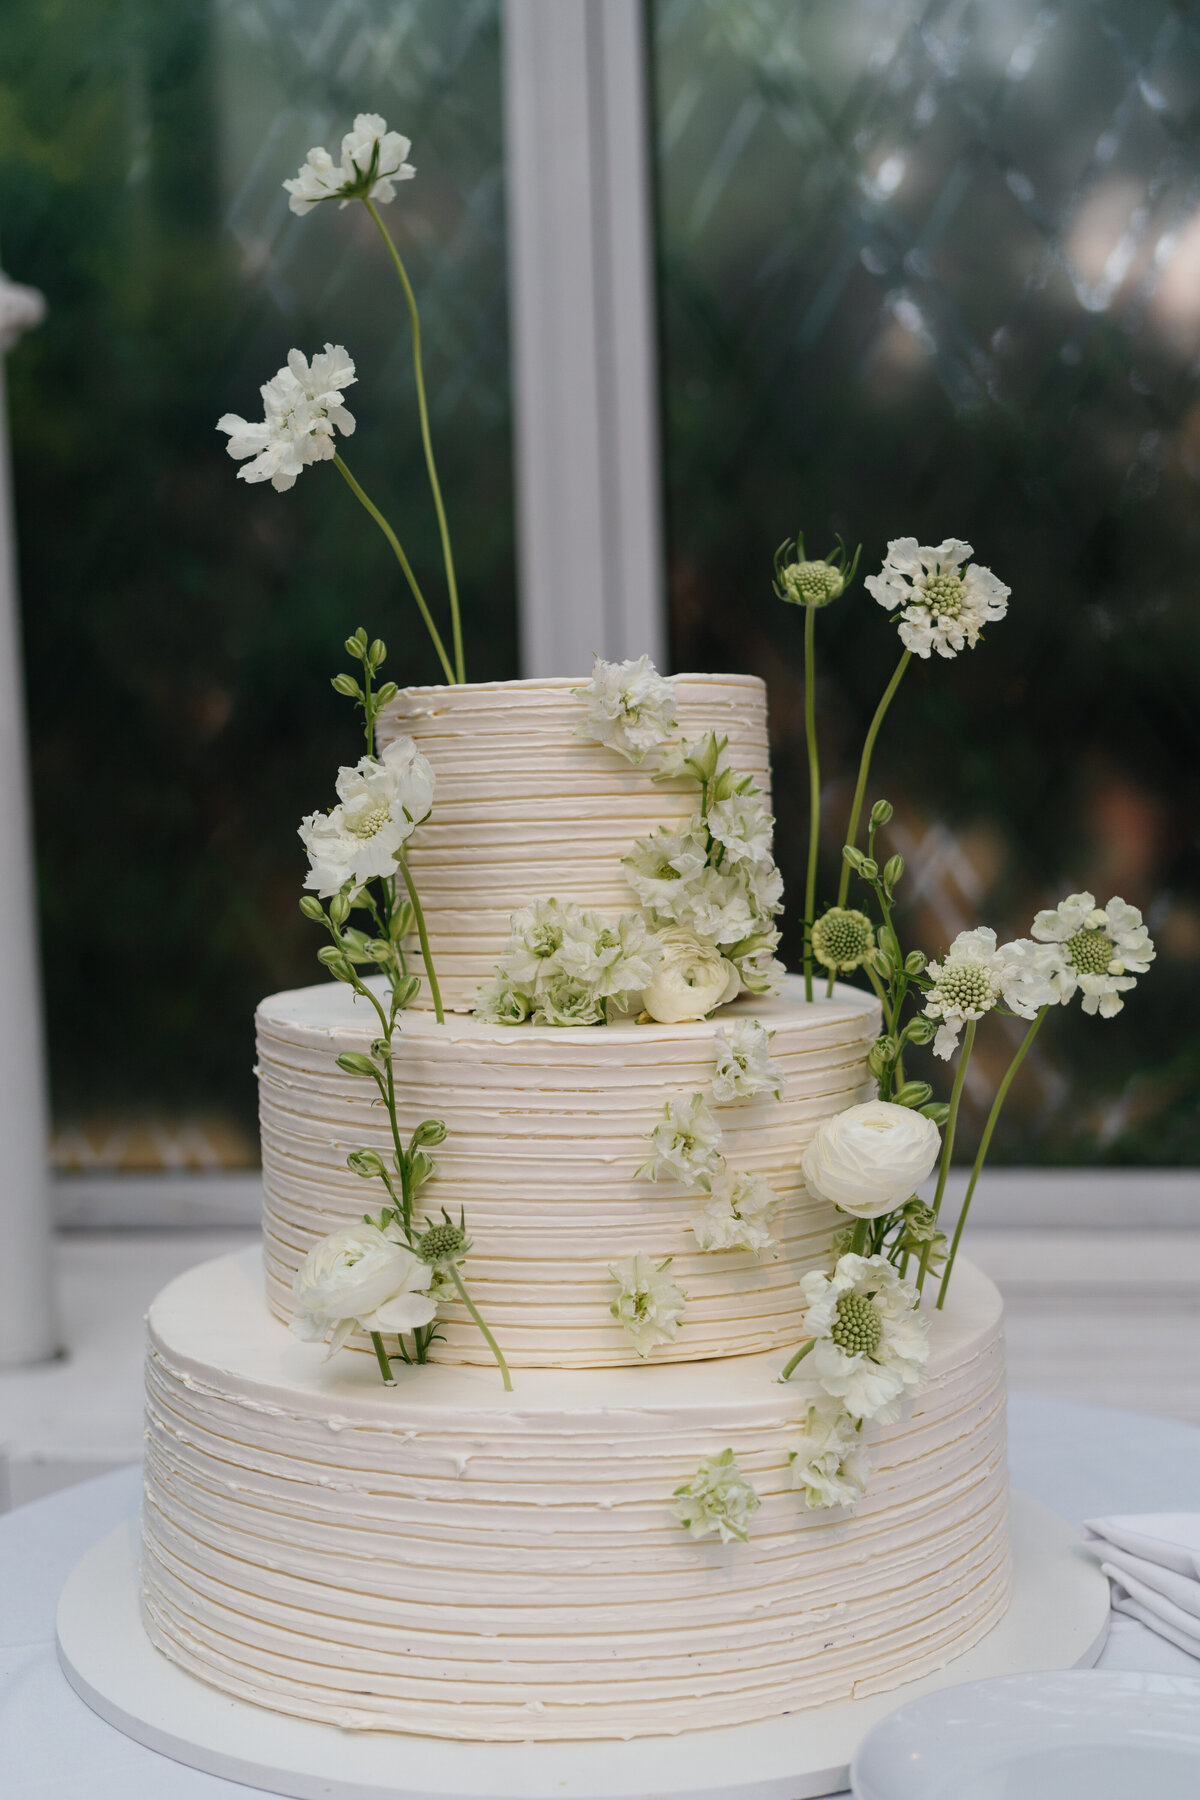 tiered-wedding-cake-artsy-minimalist-flowers-sophisticated-garden-reception-httpswww.todaysbridesf.cominspirationmodern-sophisticated-black-amp-white-wedd